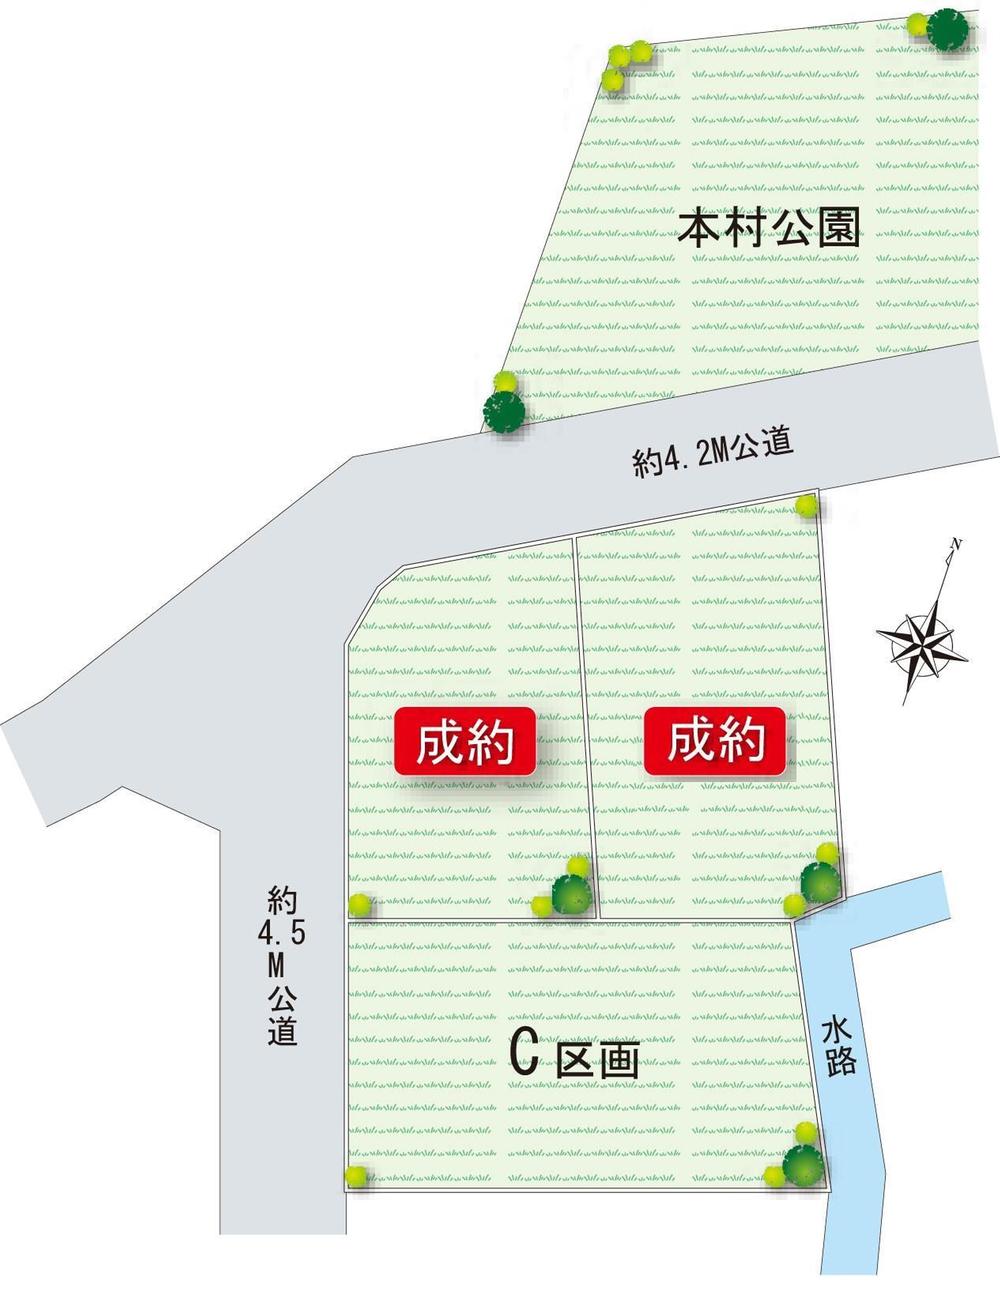 Compartment figure. Land price 22,800,000 yen, Land area 167.11 sq m compartment view